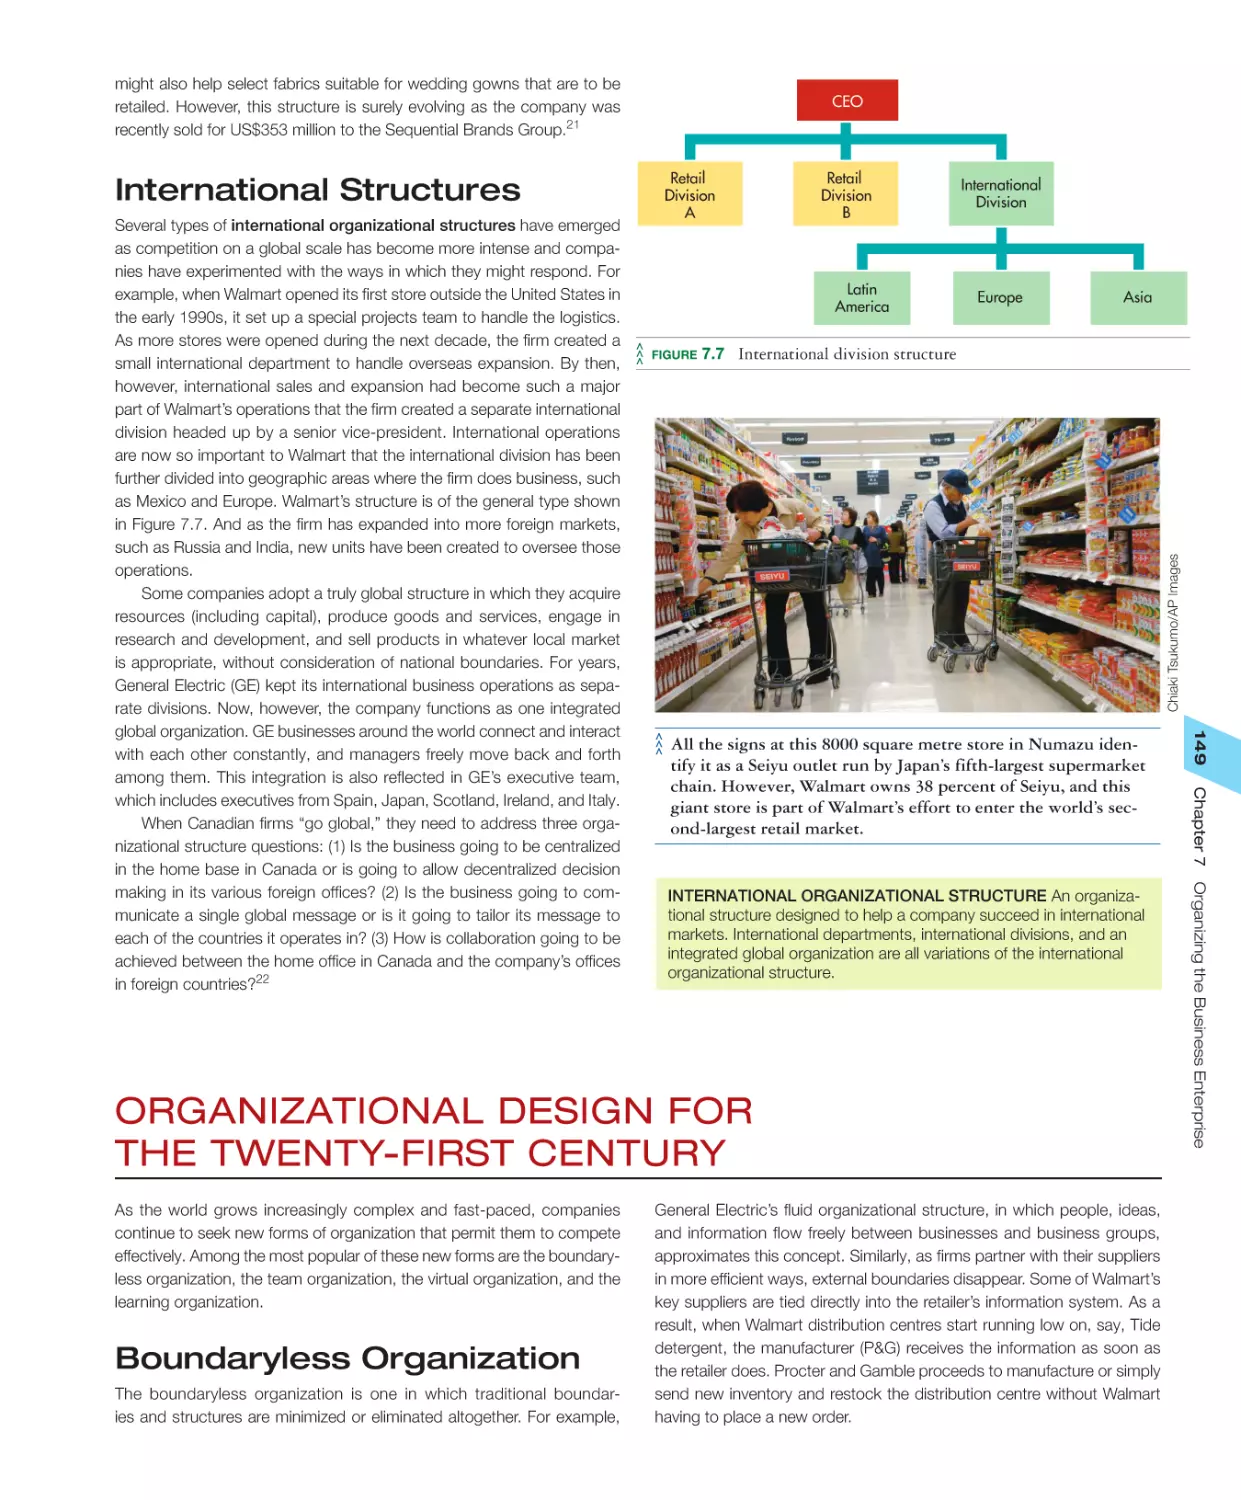 International Structures
Organizational Design for the Twenty‐First Century
Boundaryless Organization